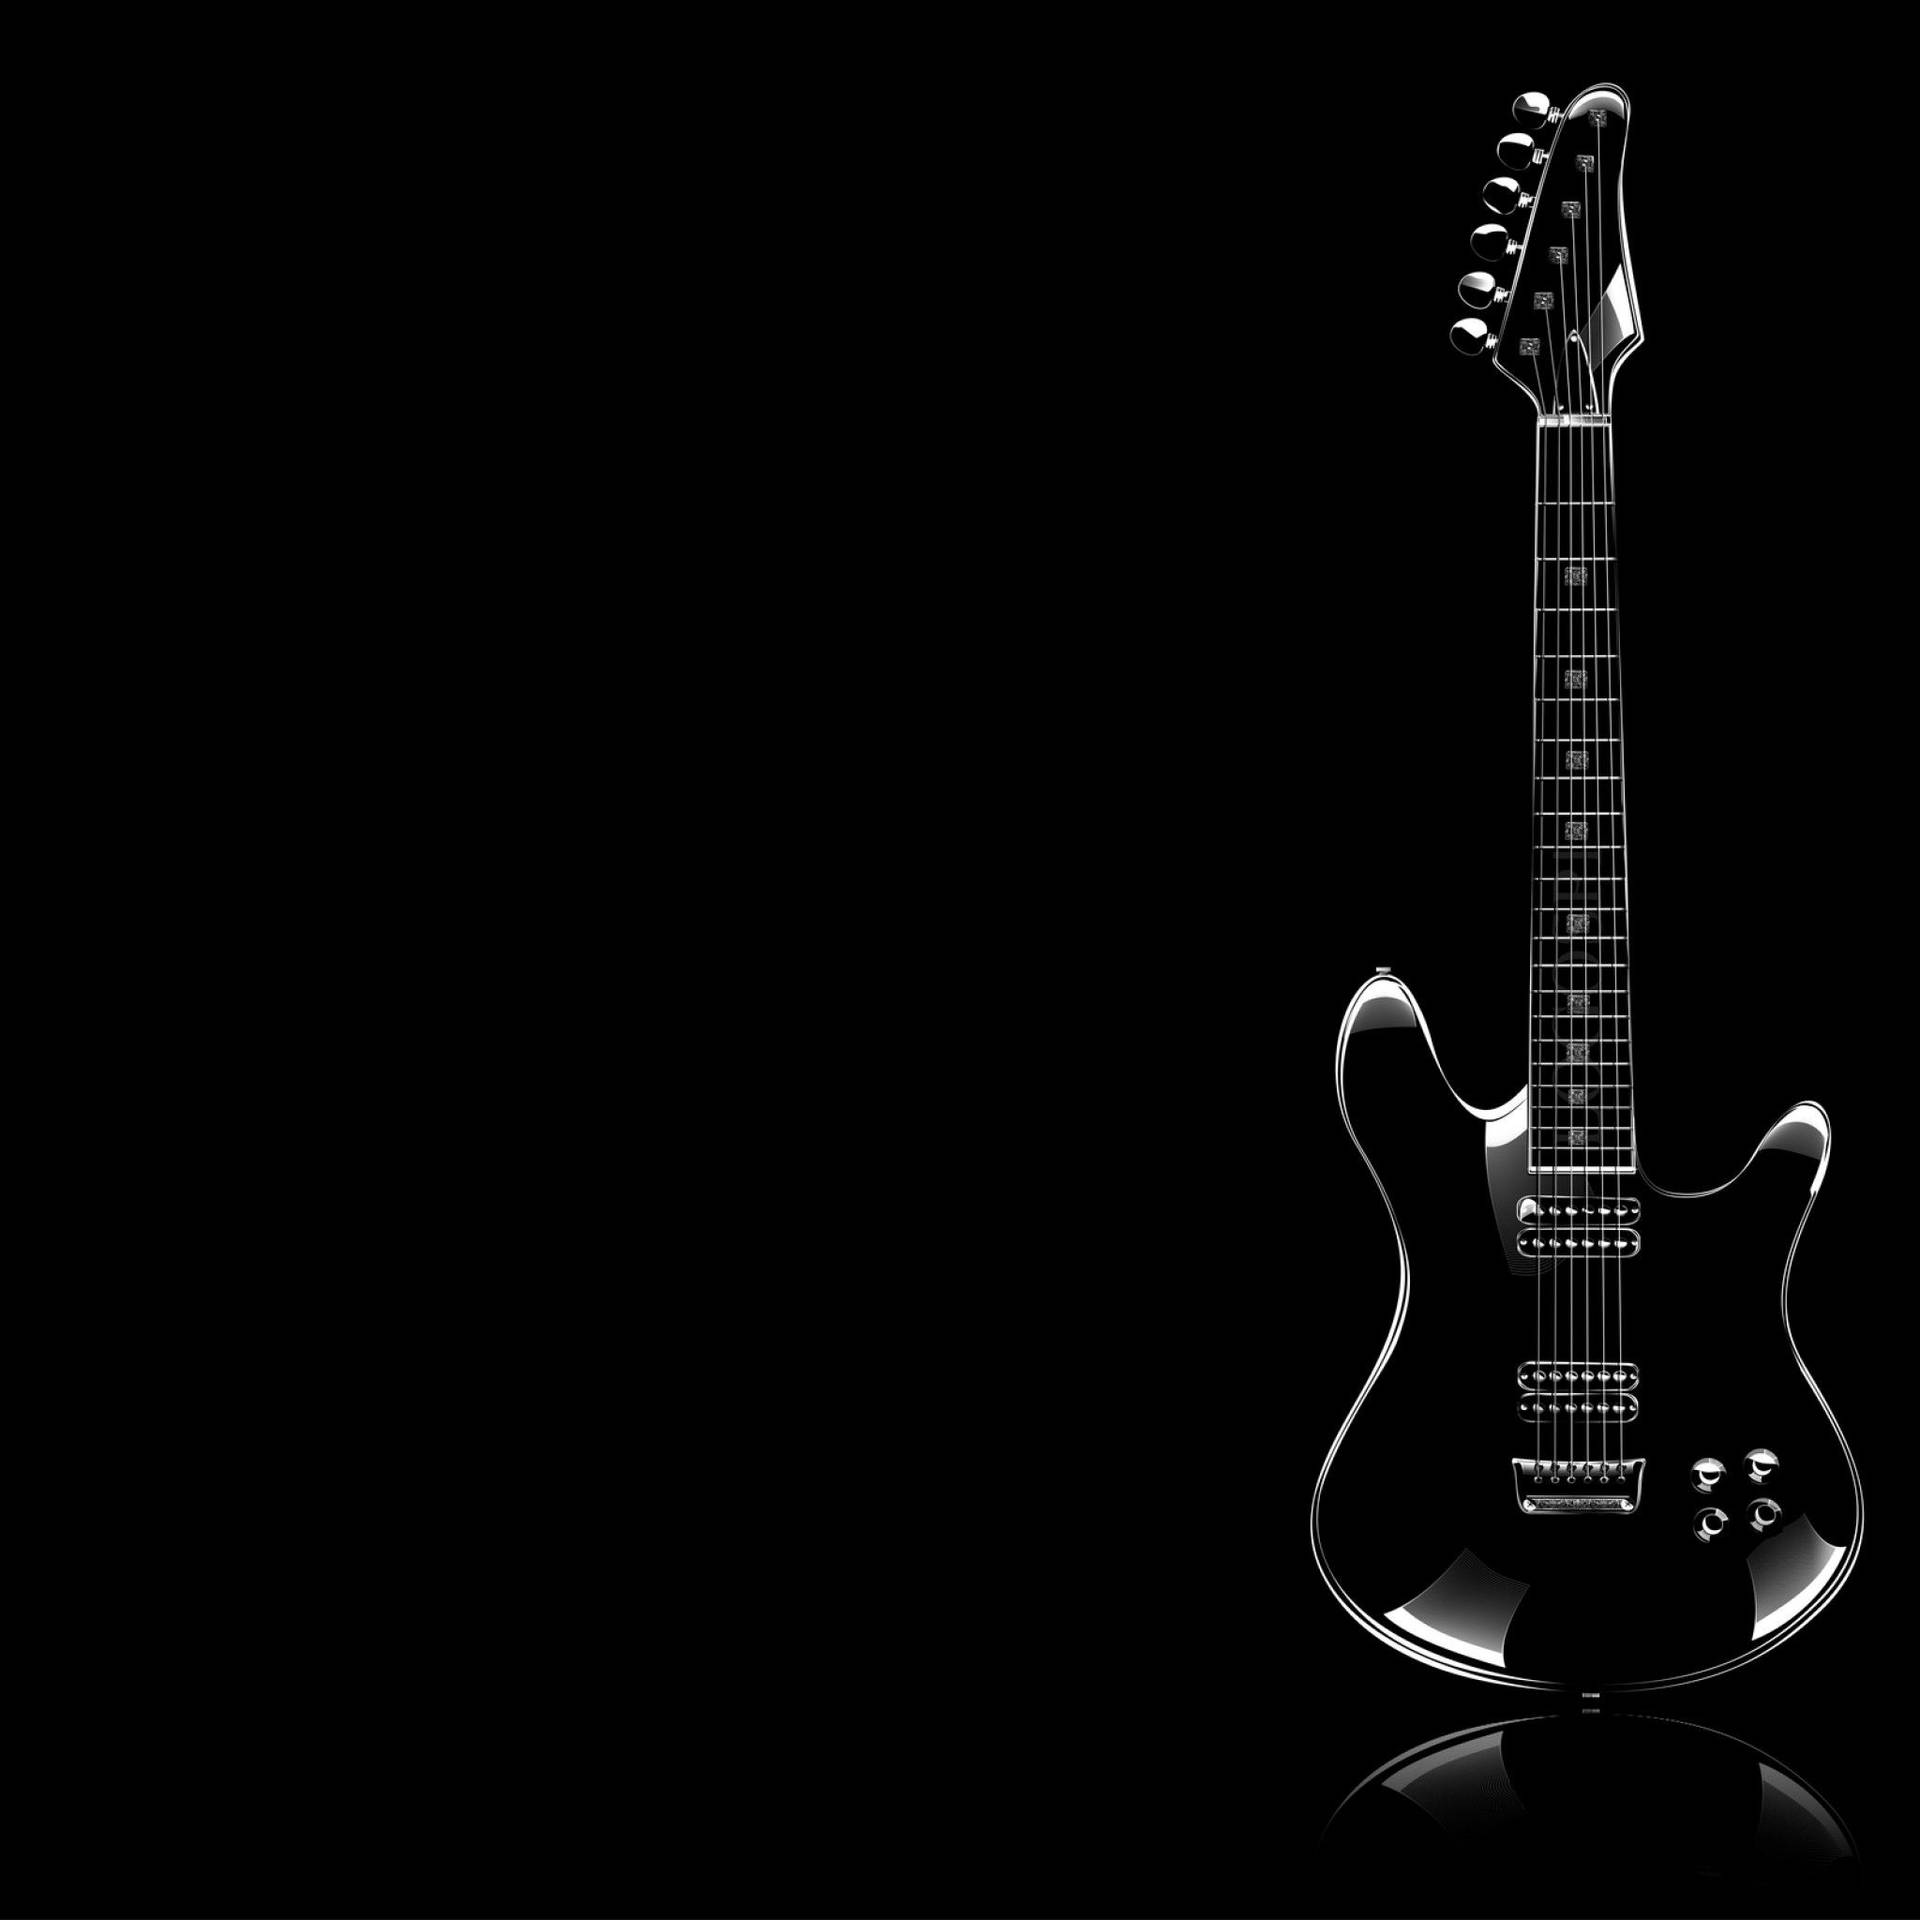 Black Sleek Guitar Background